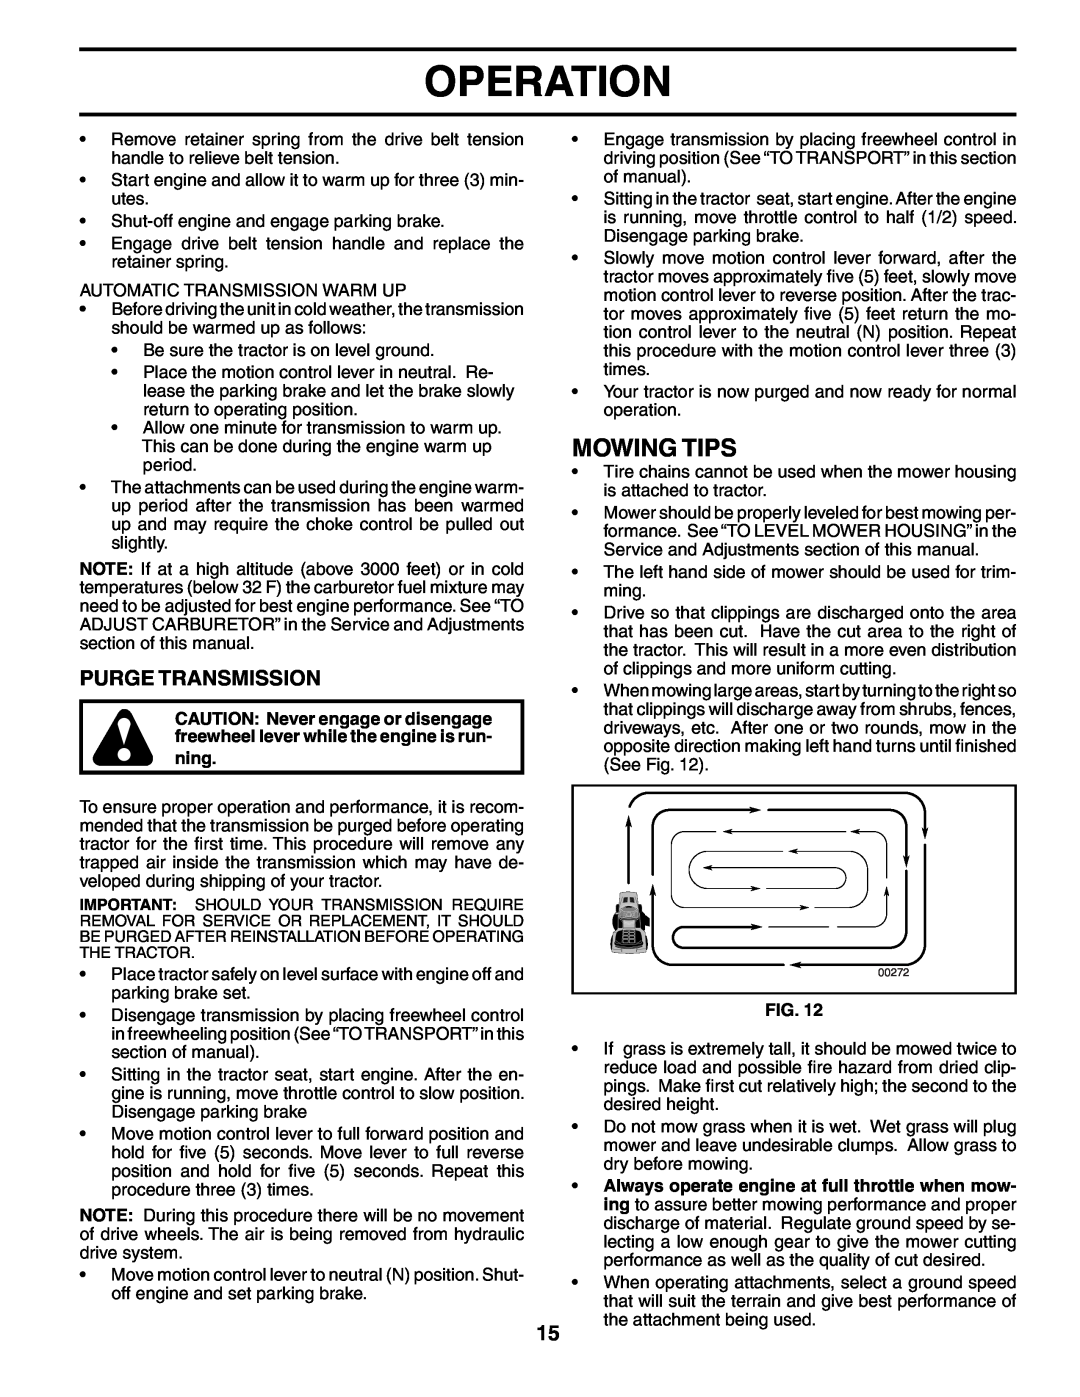 Poulan PDGT26H48B owner manual Mowing Tips, Purge Transmission, Operation 